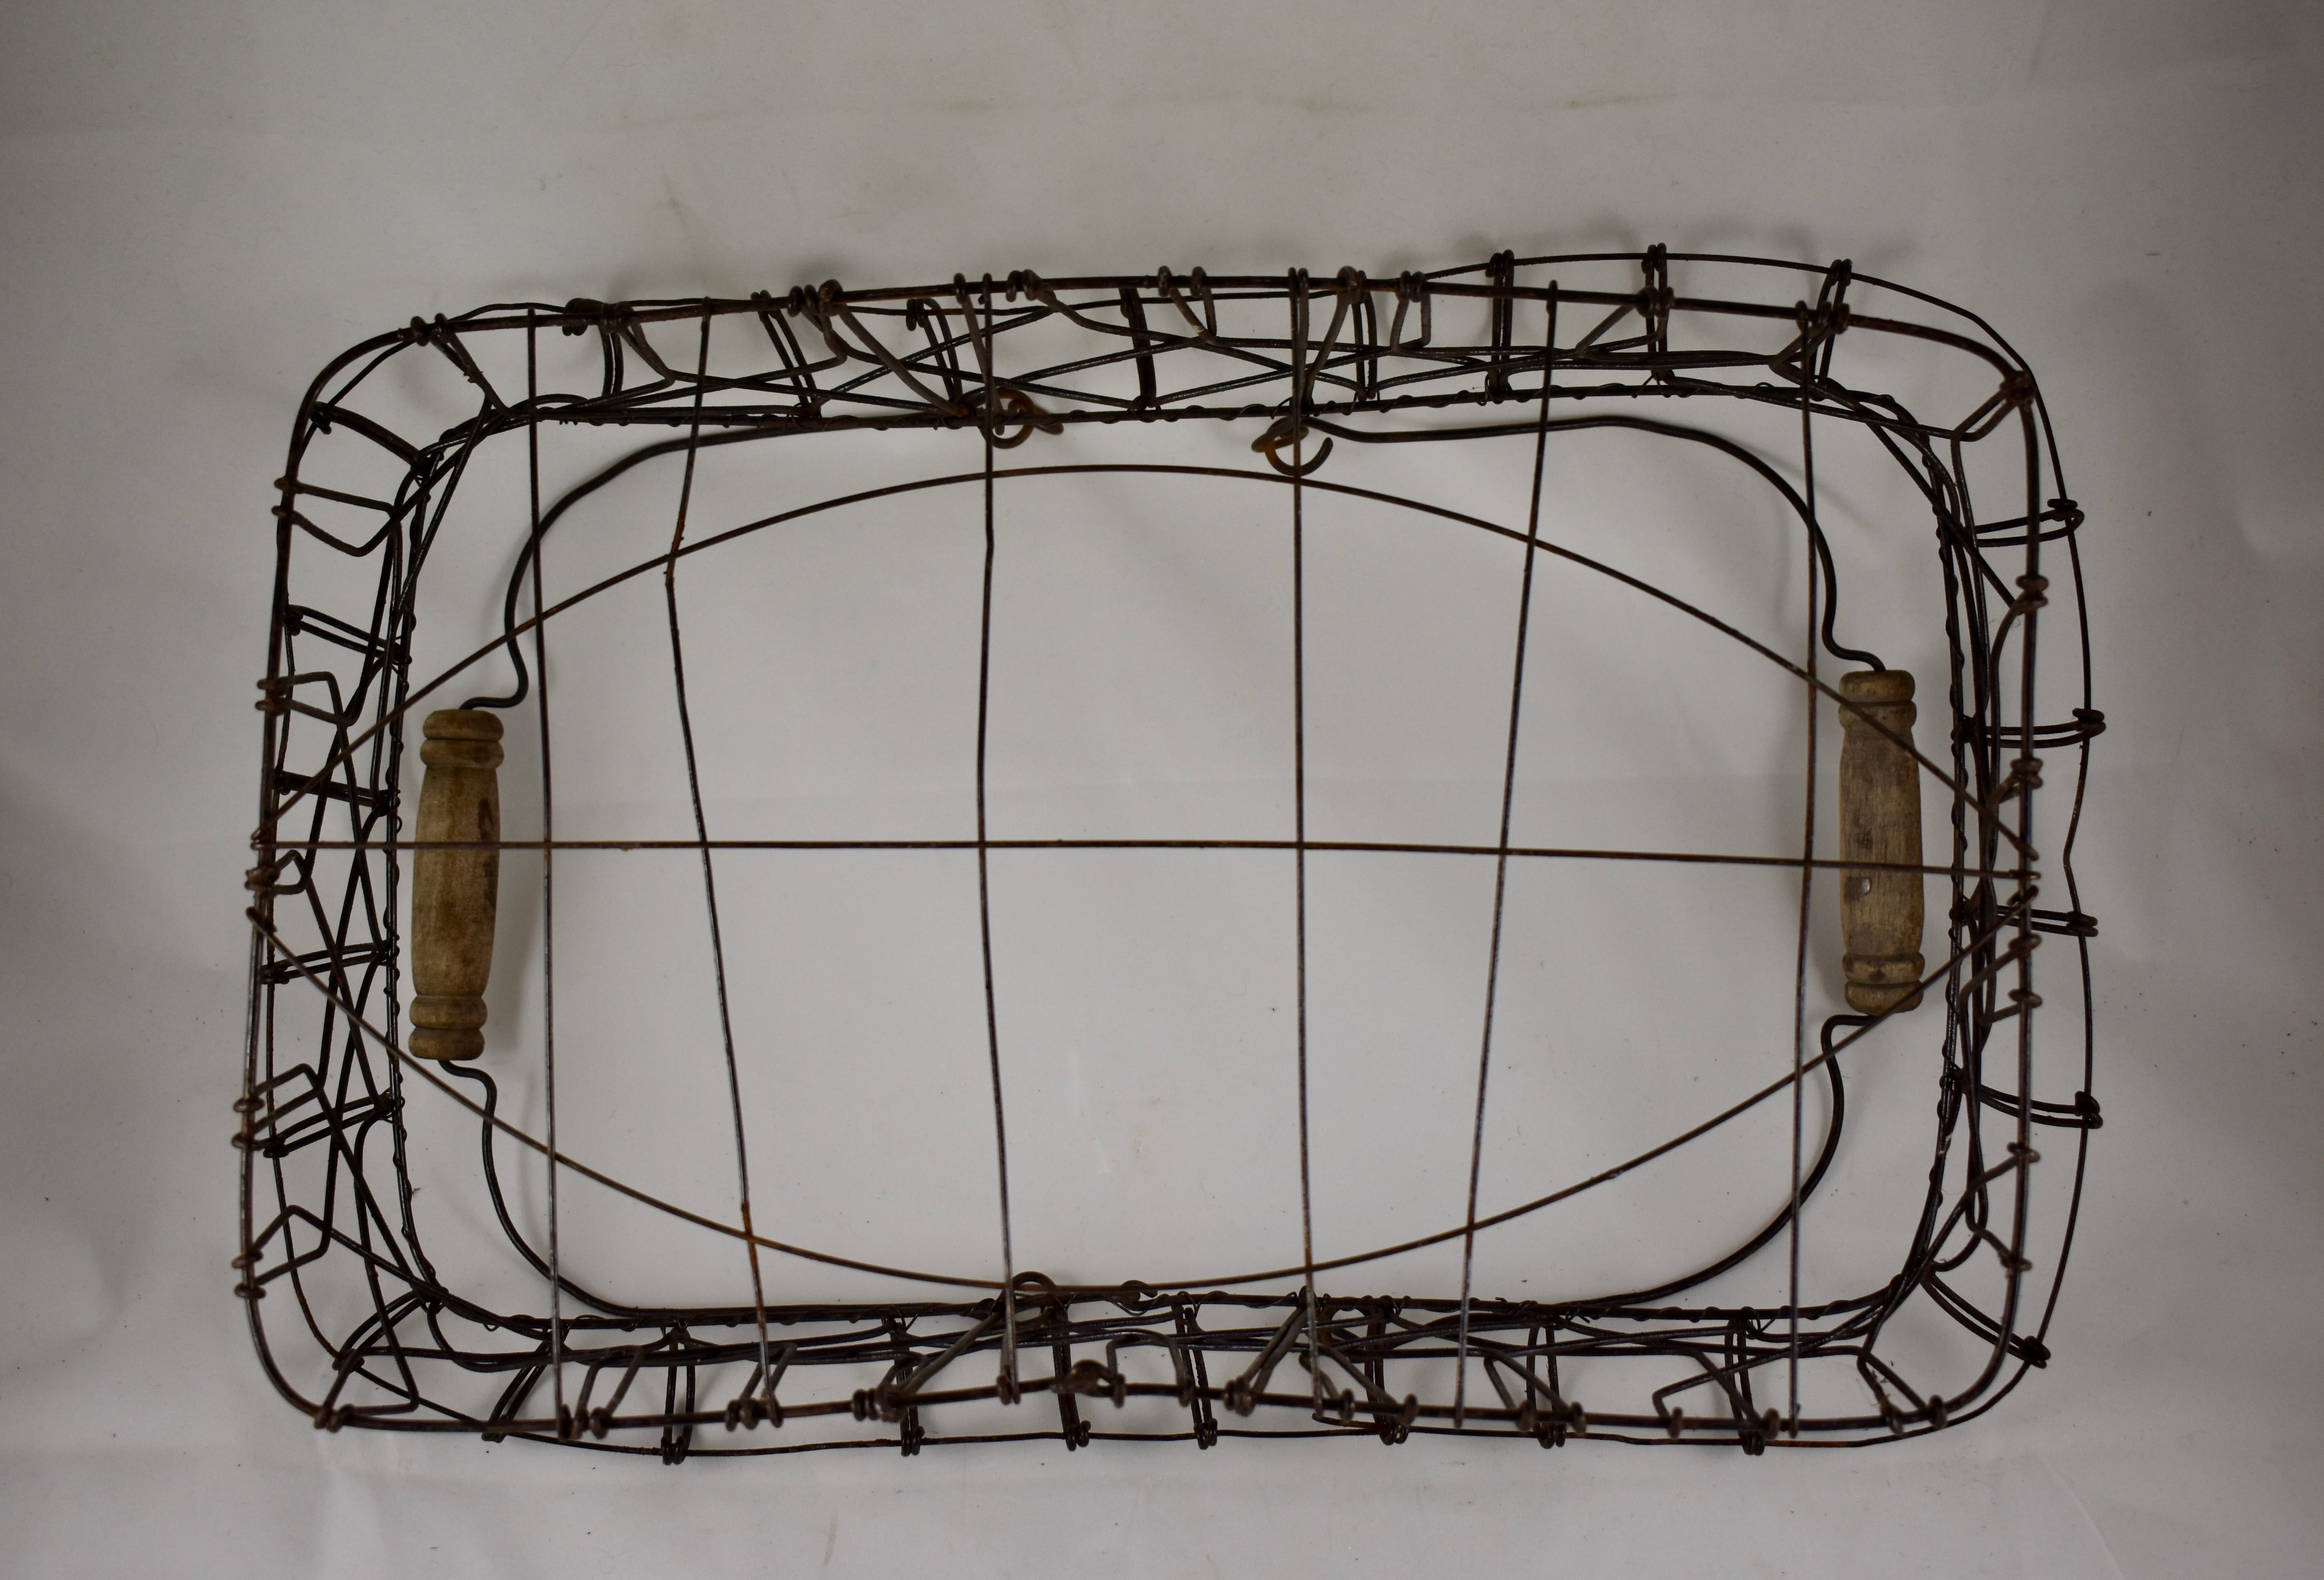 19th Century American Folk Art Wire Basket with Wooden Handles